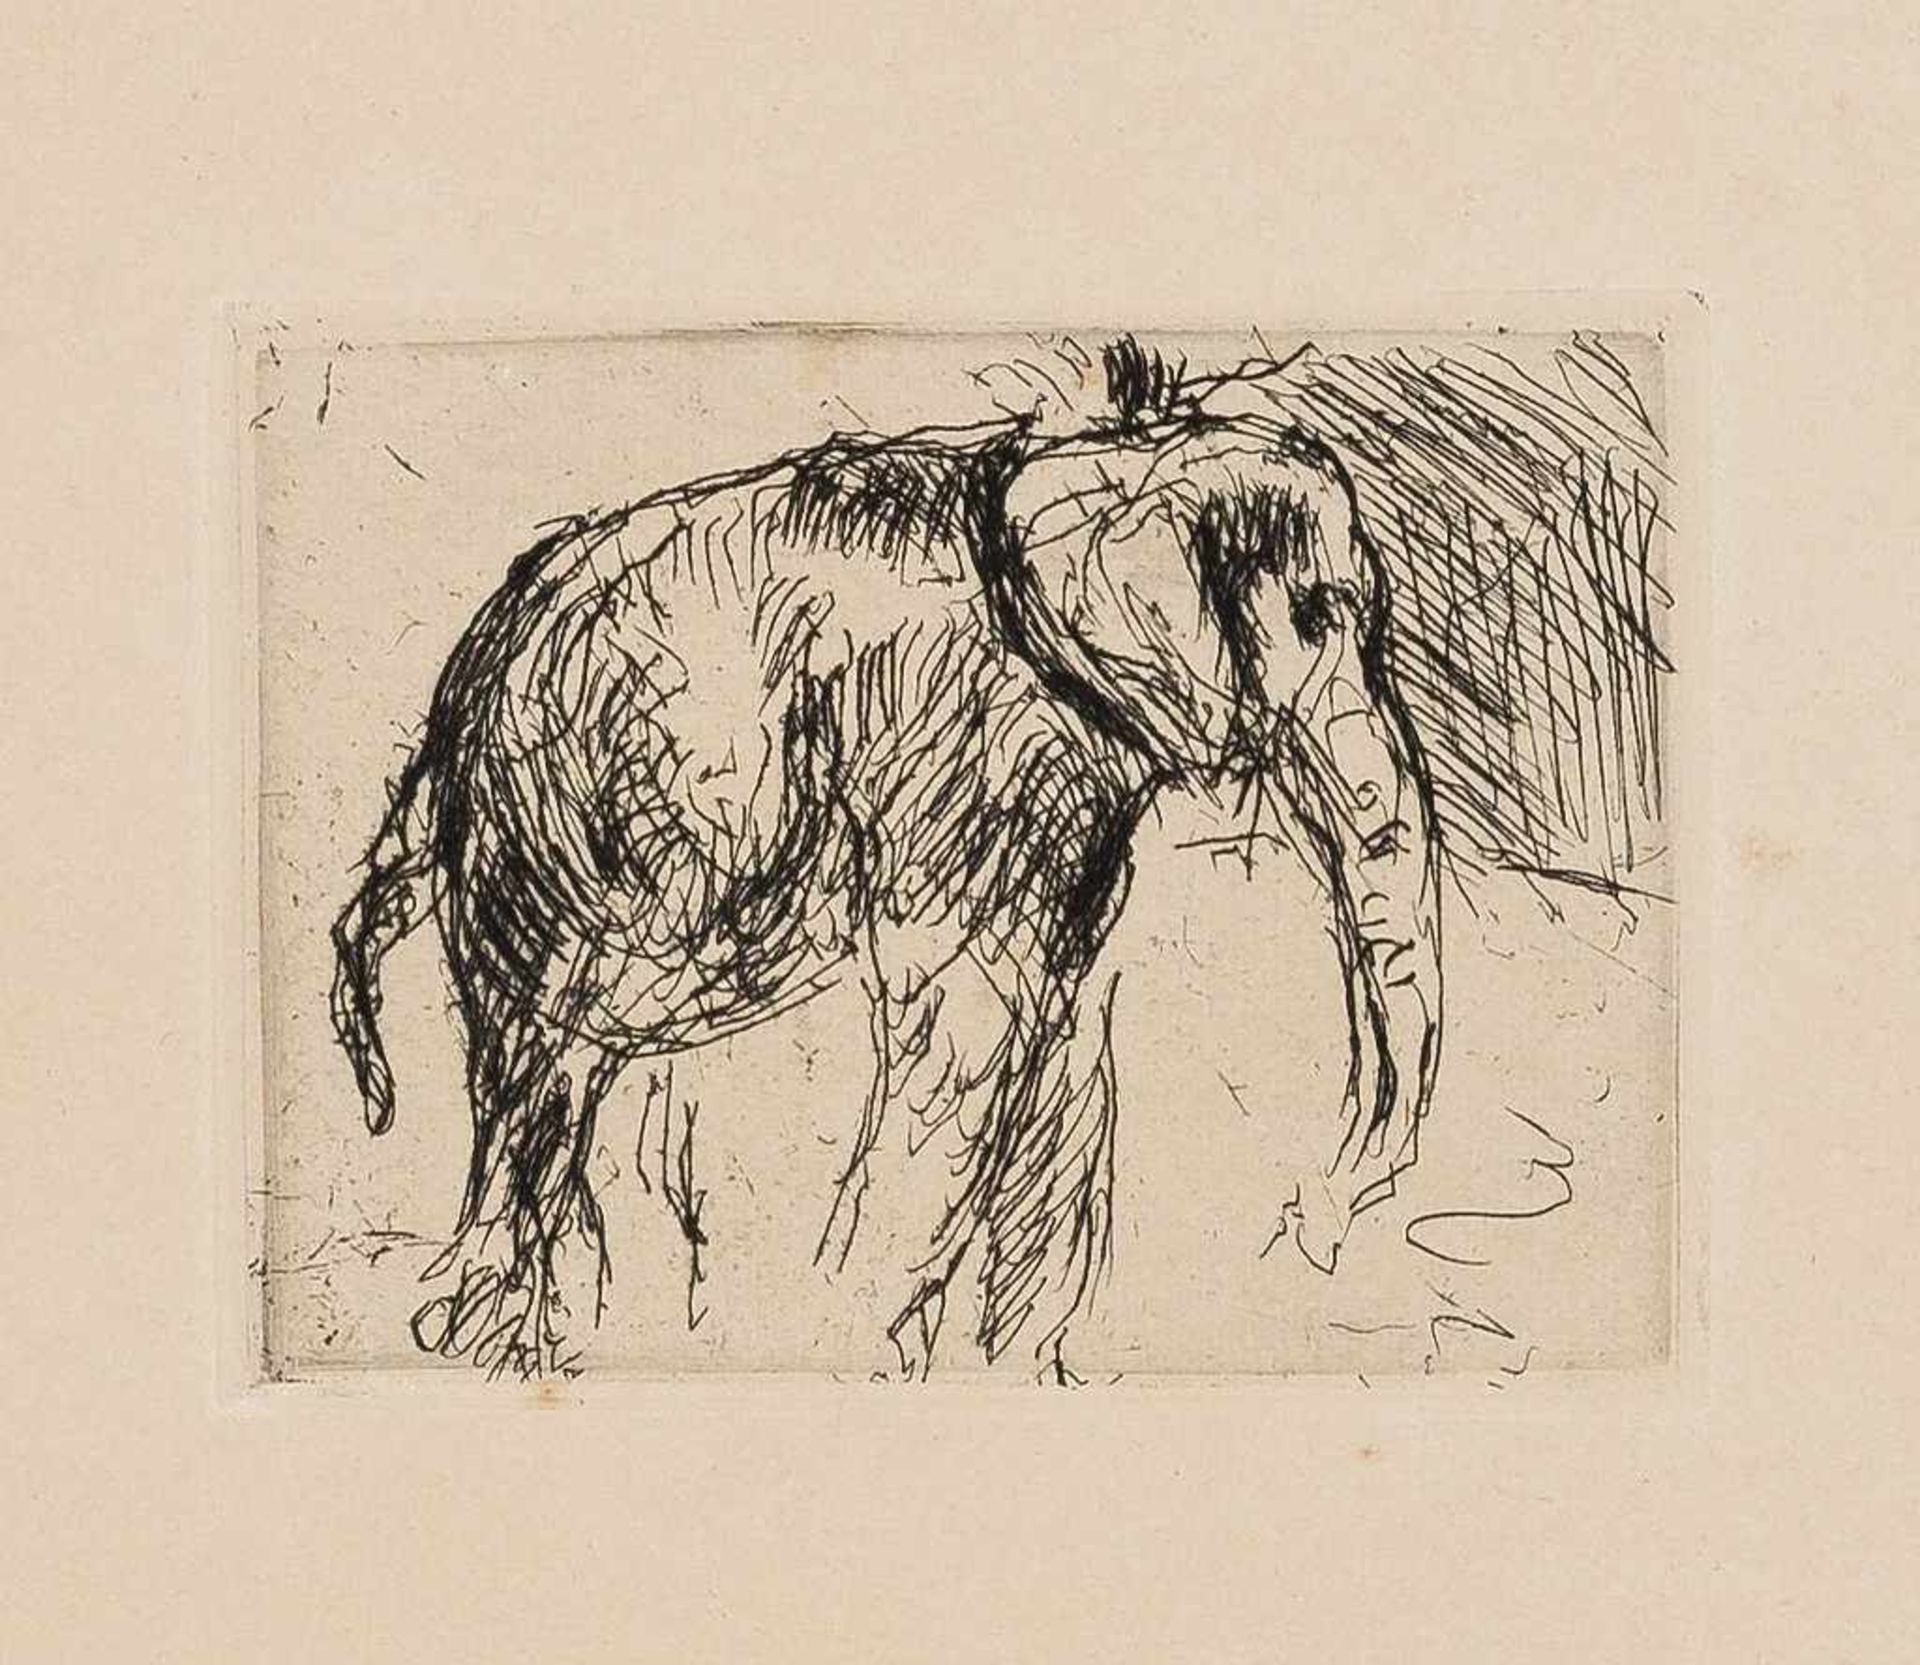 Lovis Corinth. 1858 Tapiau - 1925 Zandvoort. Um 1917/18. Elefant. Radierung, Aufl. 150 Ex. Pl. 8,6 x